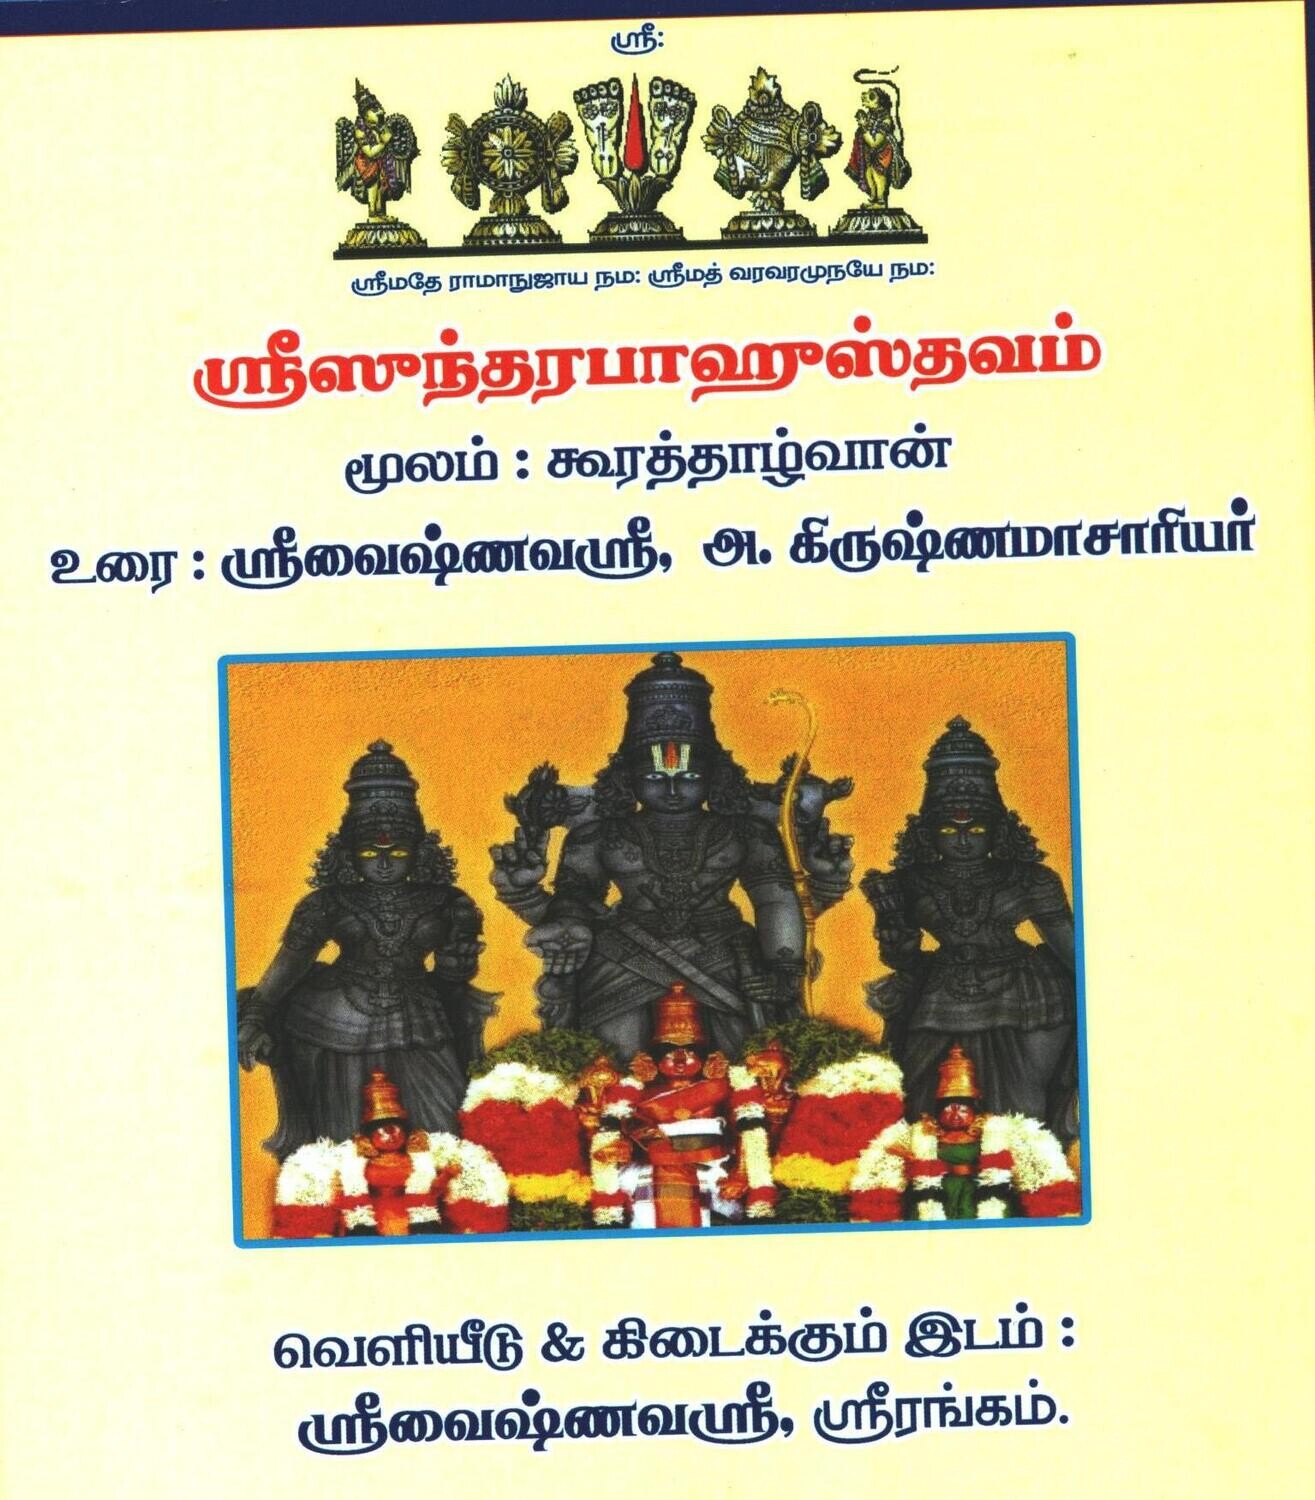 printed book A4 size, Sundarabahu sthavam ; ஸுந்தரபாஹு ஸ்தவம், எளிய தமிழ் நடை உரை.